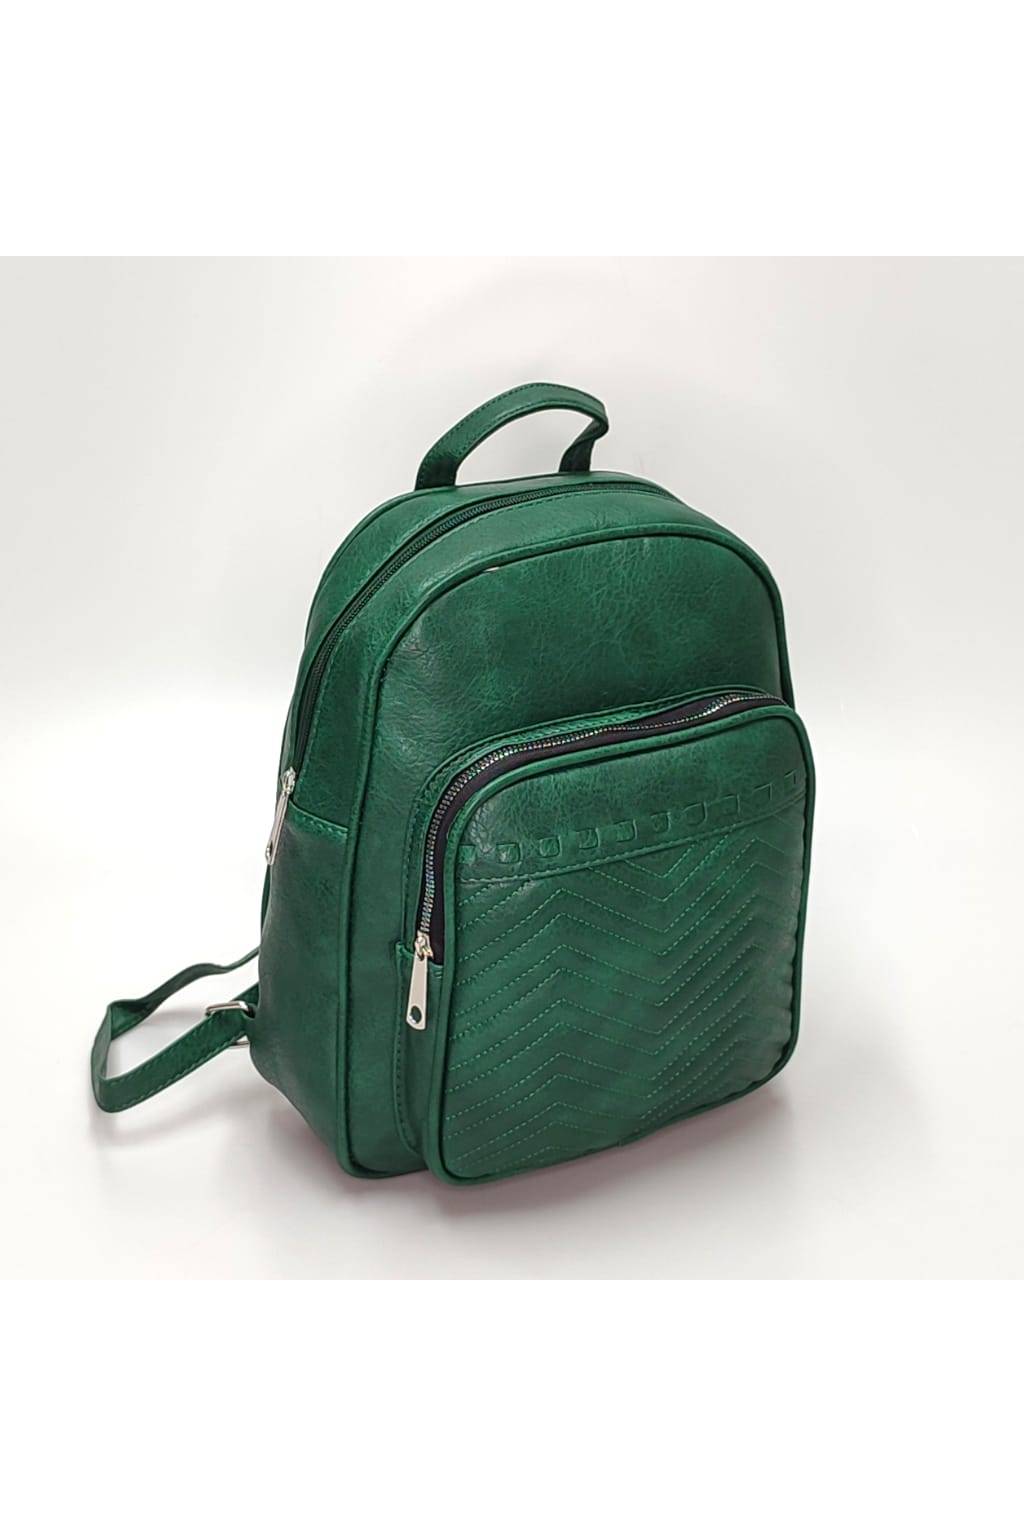 Dámsky ruksak DL0113 zelený www.kabelky vypredaj (2)